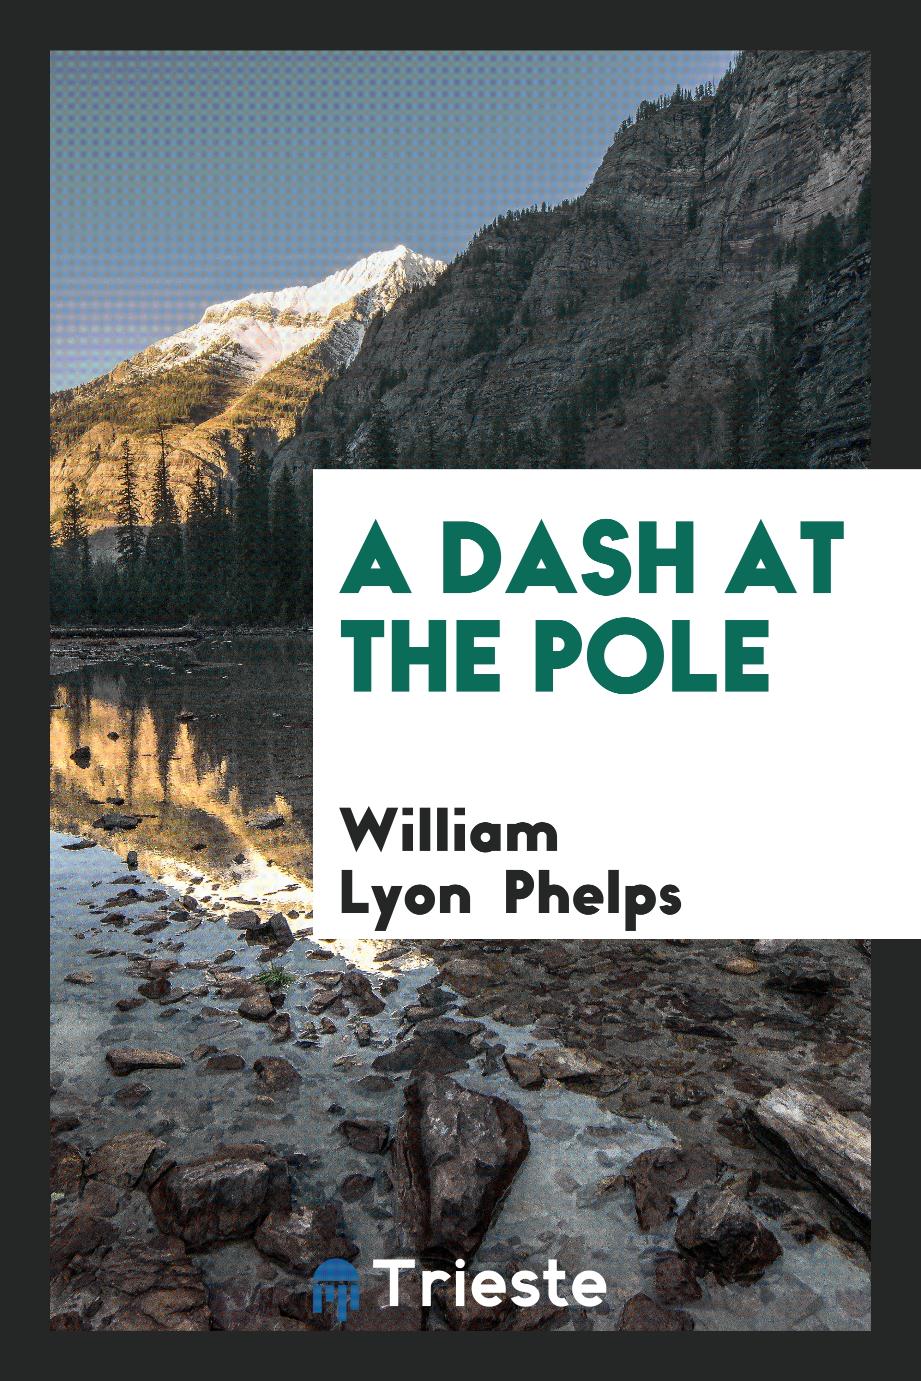 A Dash at the Pole